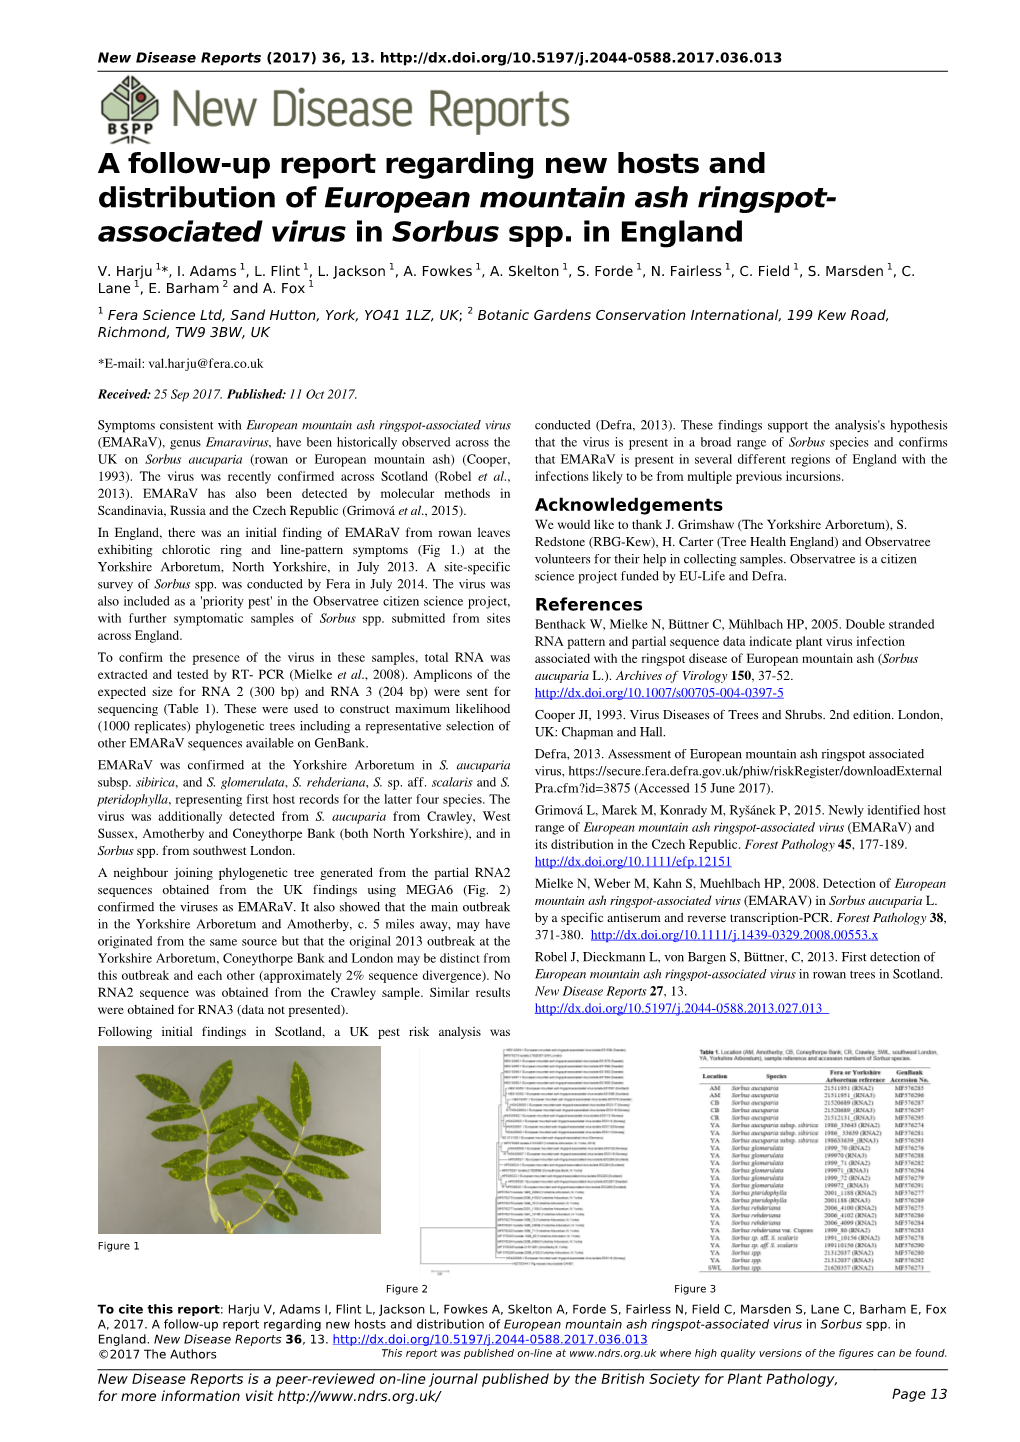 Associated Virus in Sorbus Spp. in England